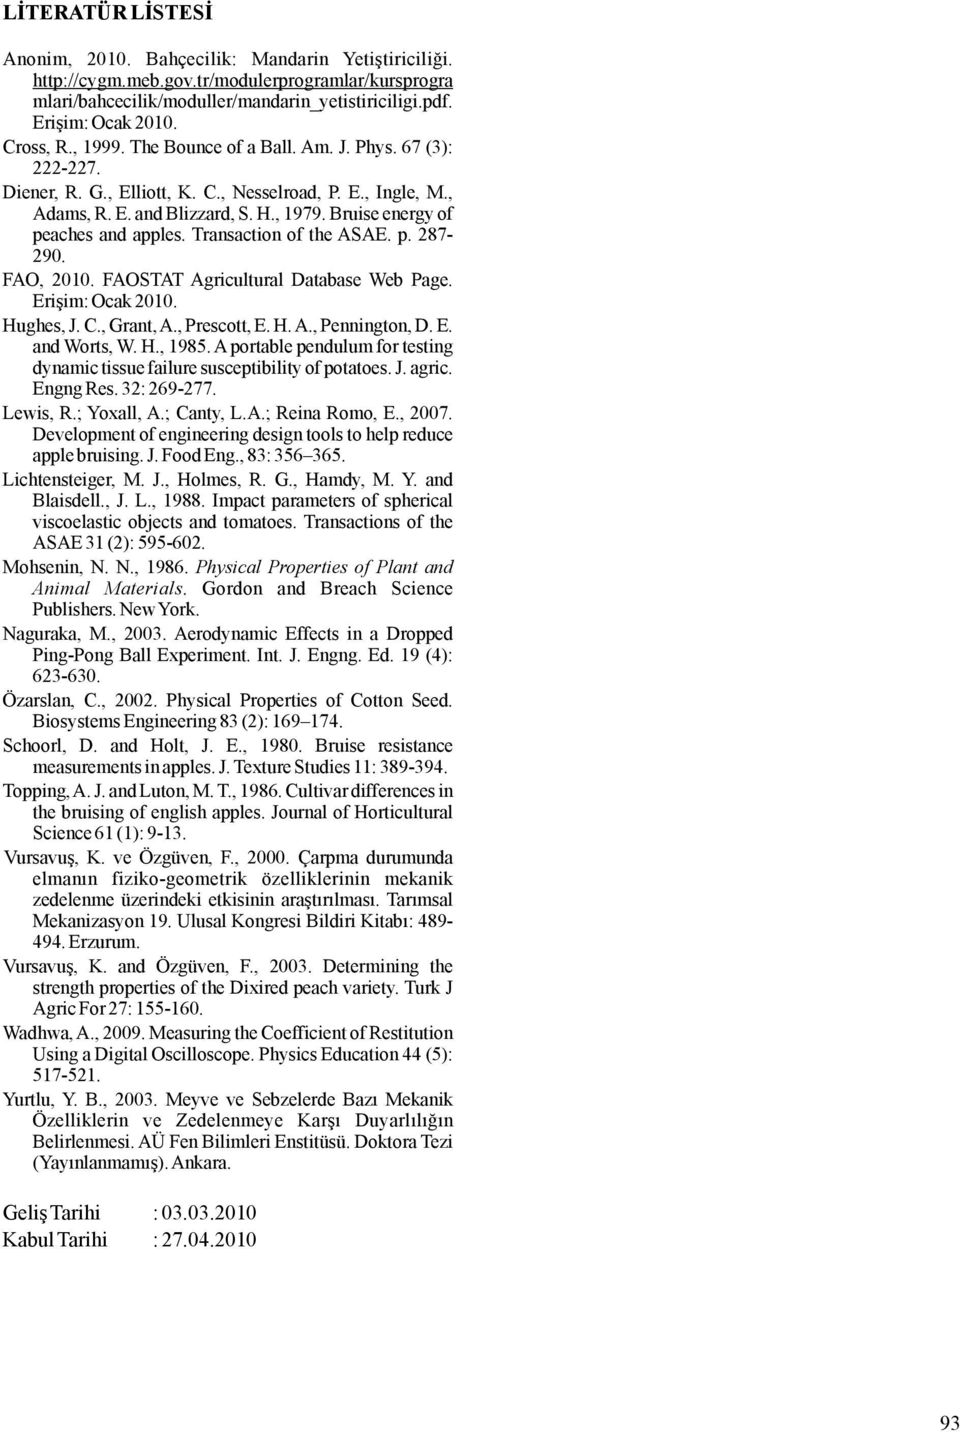 Transaction of theasae. p. 87-90. FAO, 010. FAOSTATAgricultural Database Web Page. Erişim:Ocak010. Hughes,J.C.,Grant,A.,Prescott,E.H.A.,Pennington,D.E. andworts,w.h.,1985.